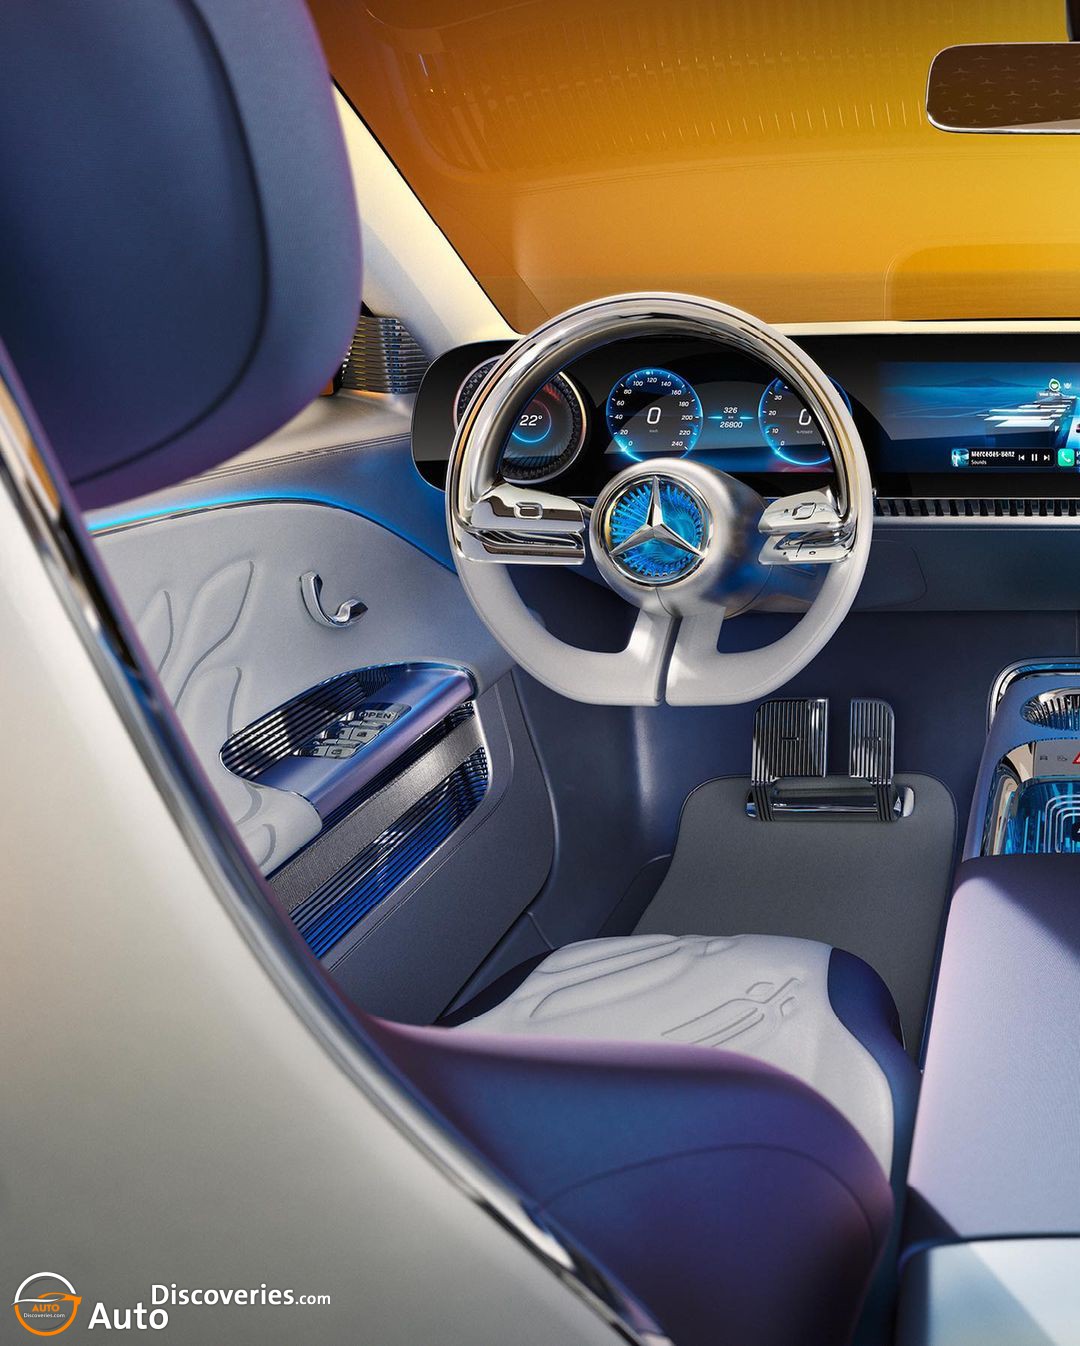 Mercedes-Benz Concept CLA-Class Revealed With EQXX Tech